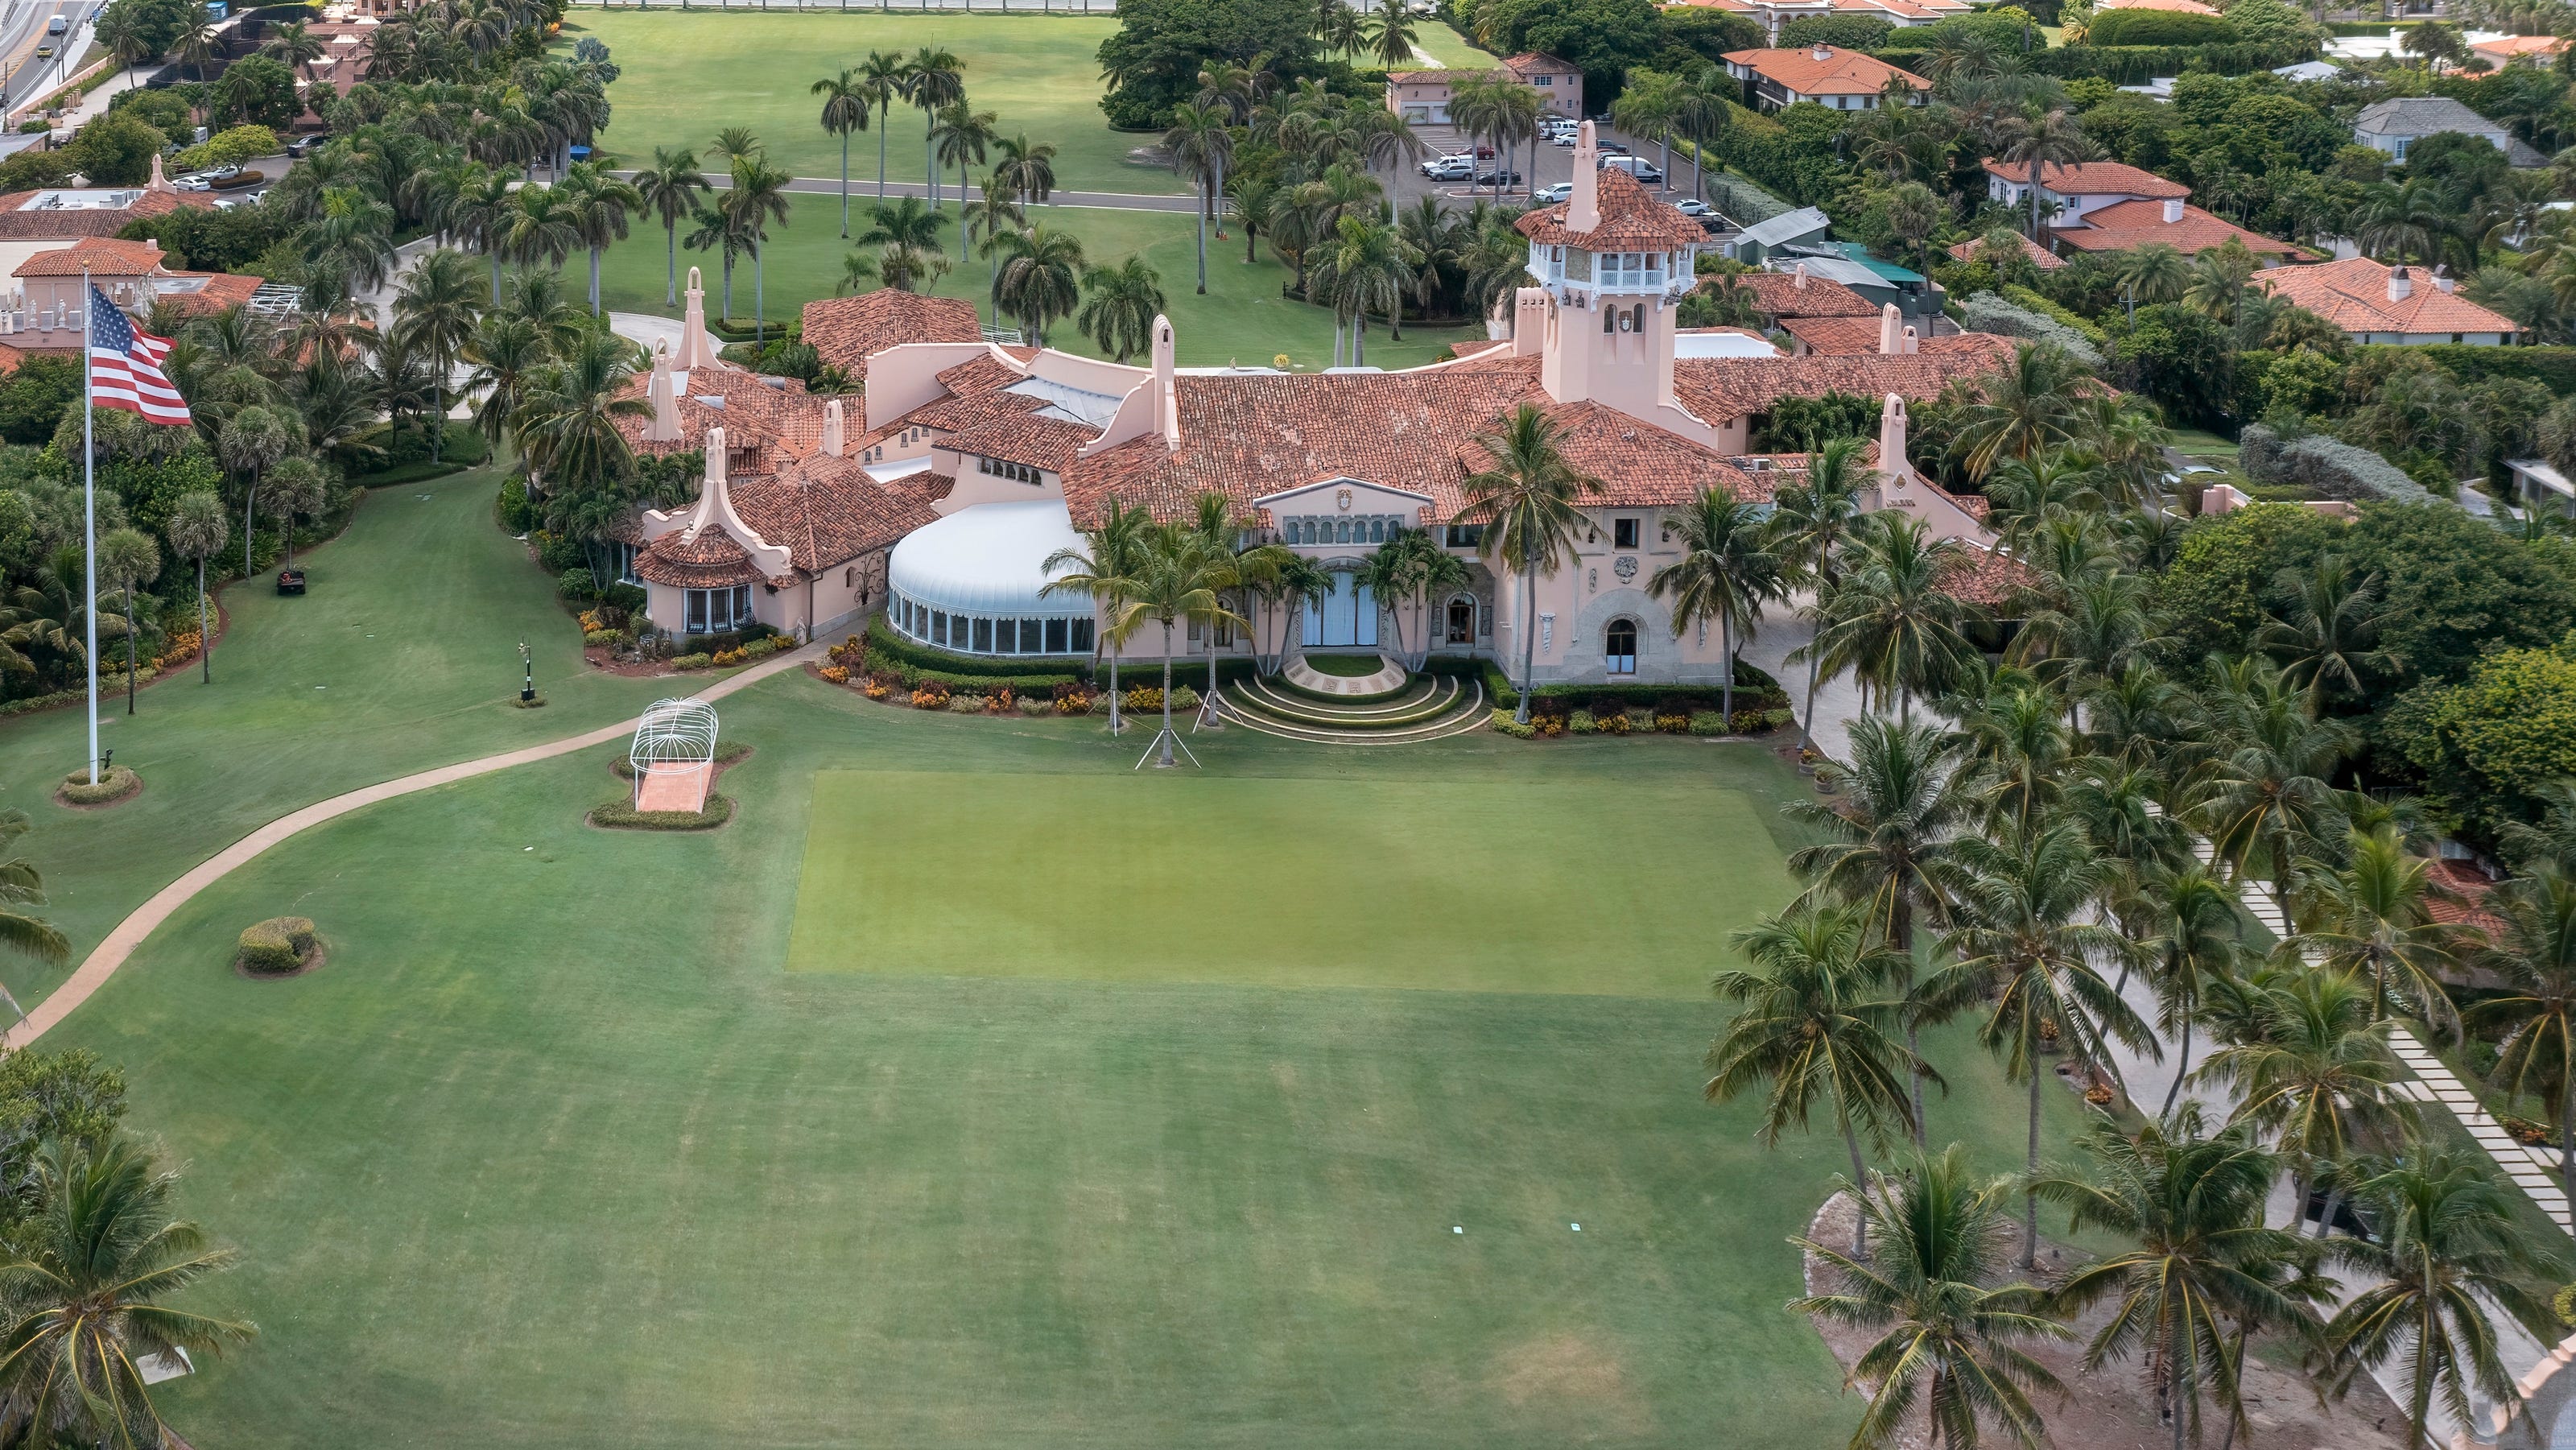 Trump's MaraLago Aerial view of former president's Palm Beach club